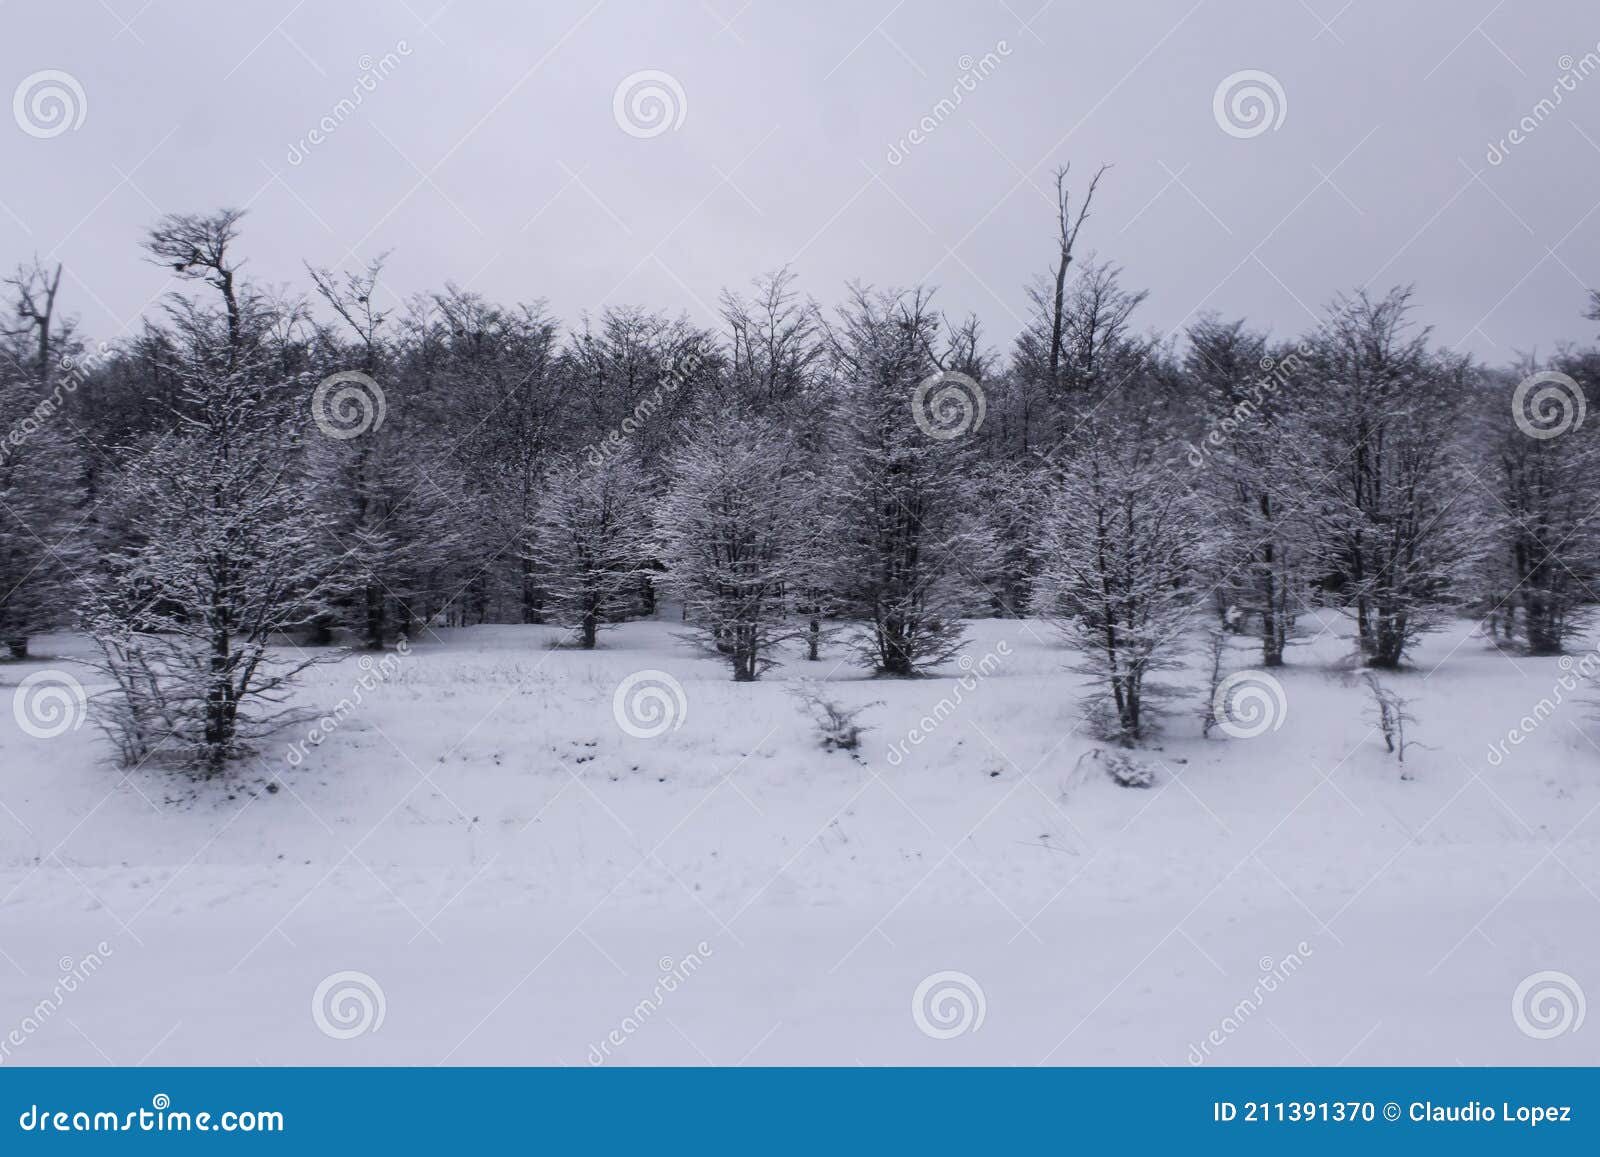 paisaje invernal con bosques llenos de nieve.